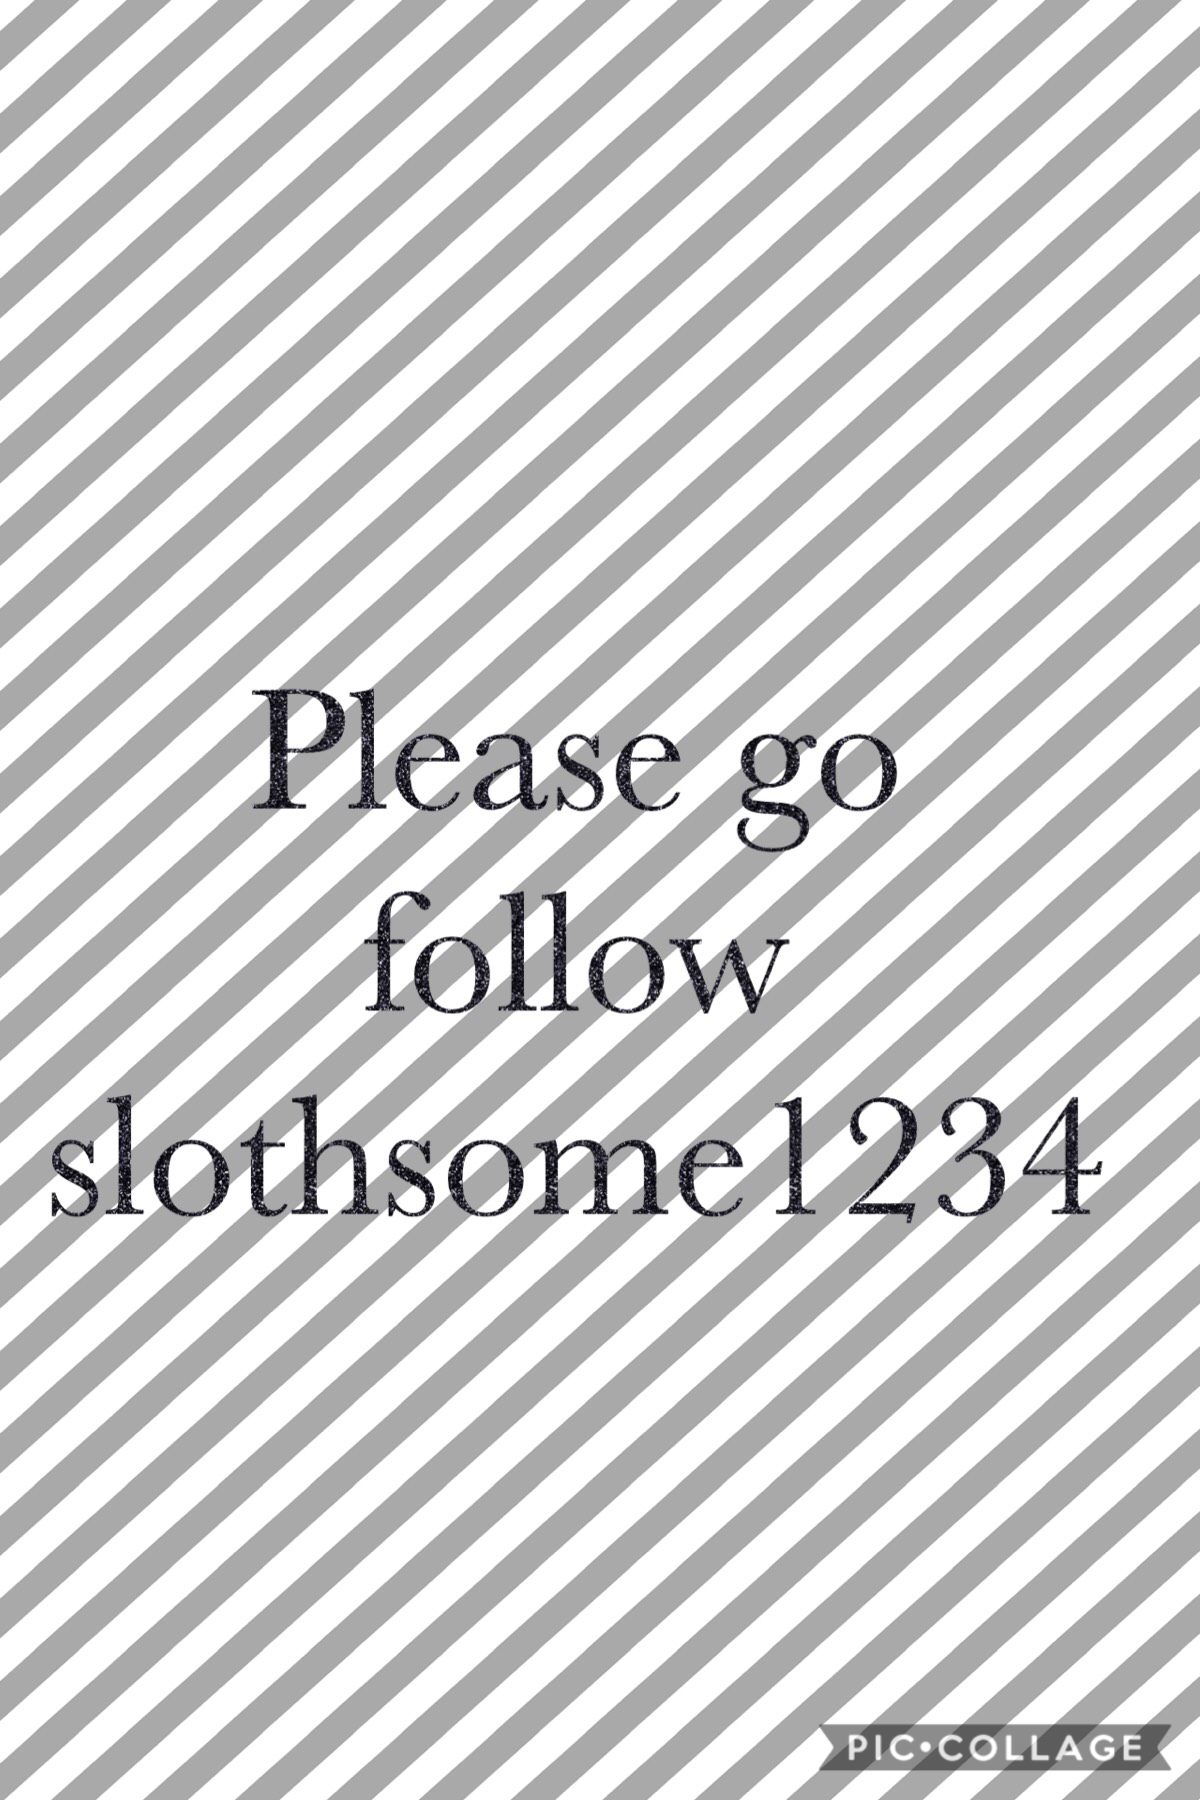 Please go follow slothsome1234 